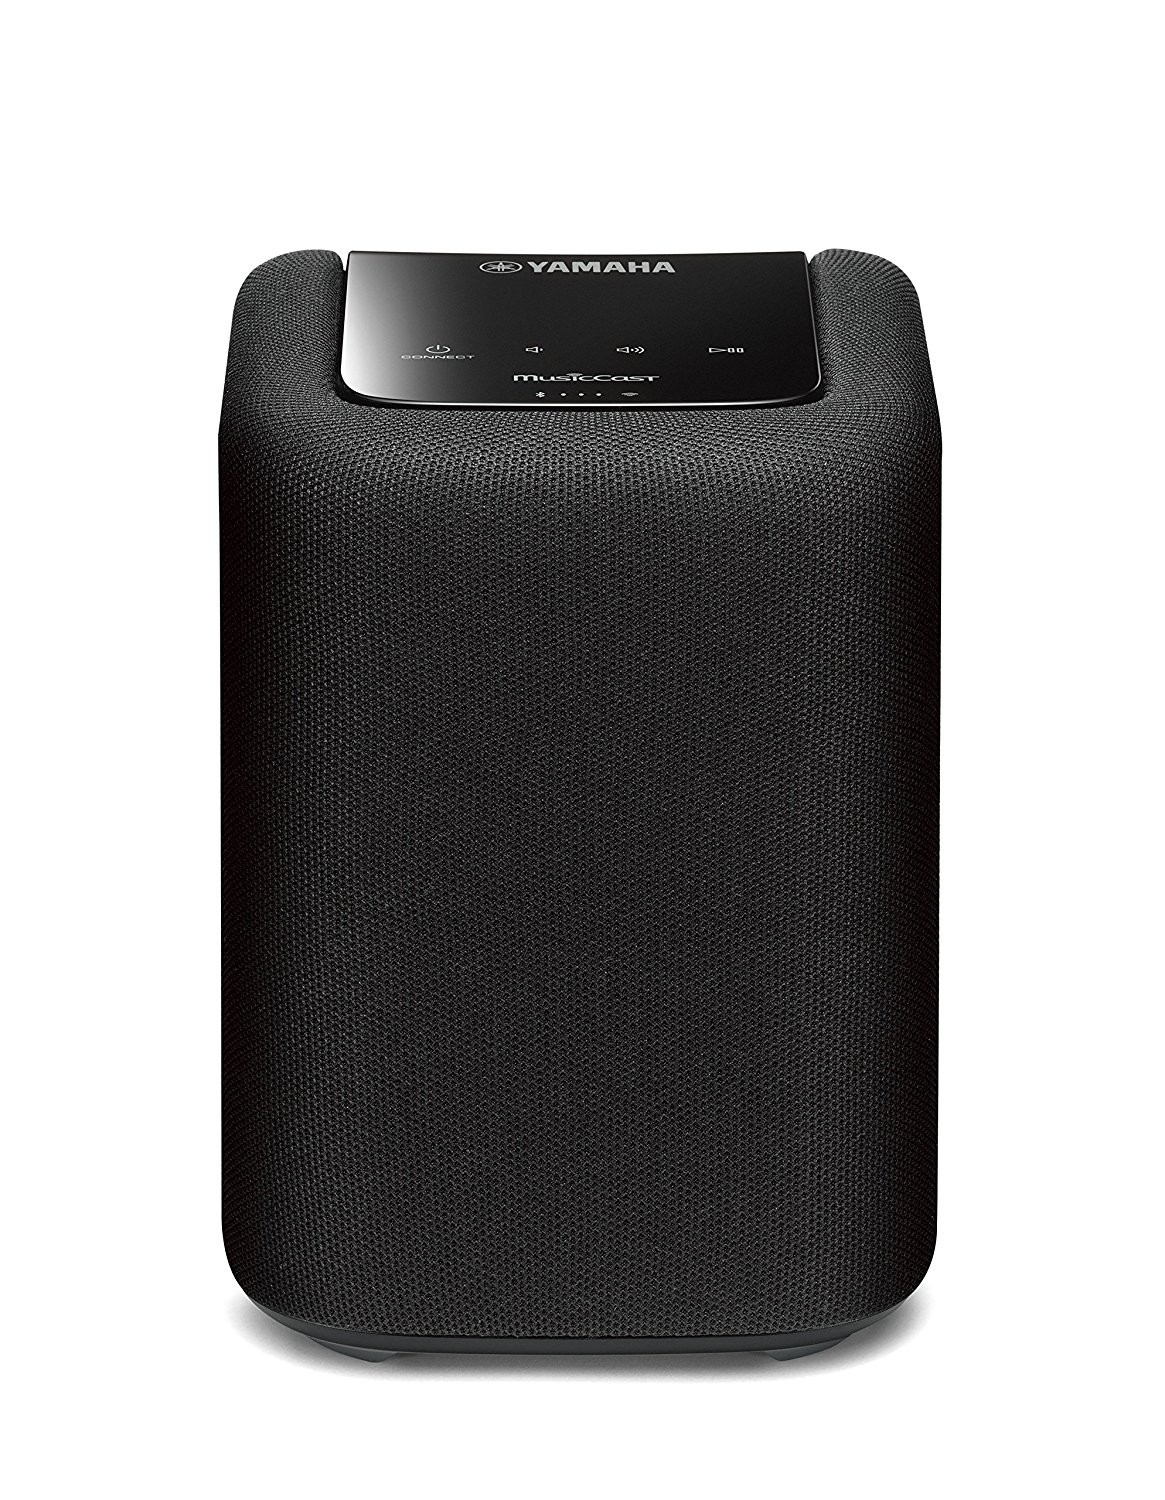 Yamaha MusicCast WX-010 Wireless Speaker with Bluetooth (Black) - image 2 of 2